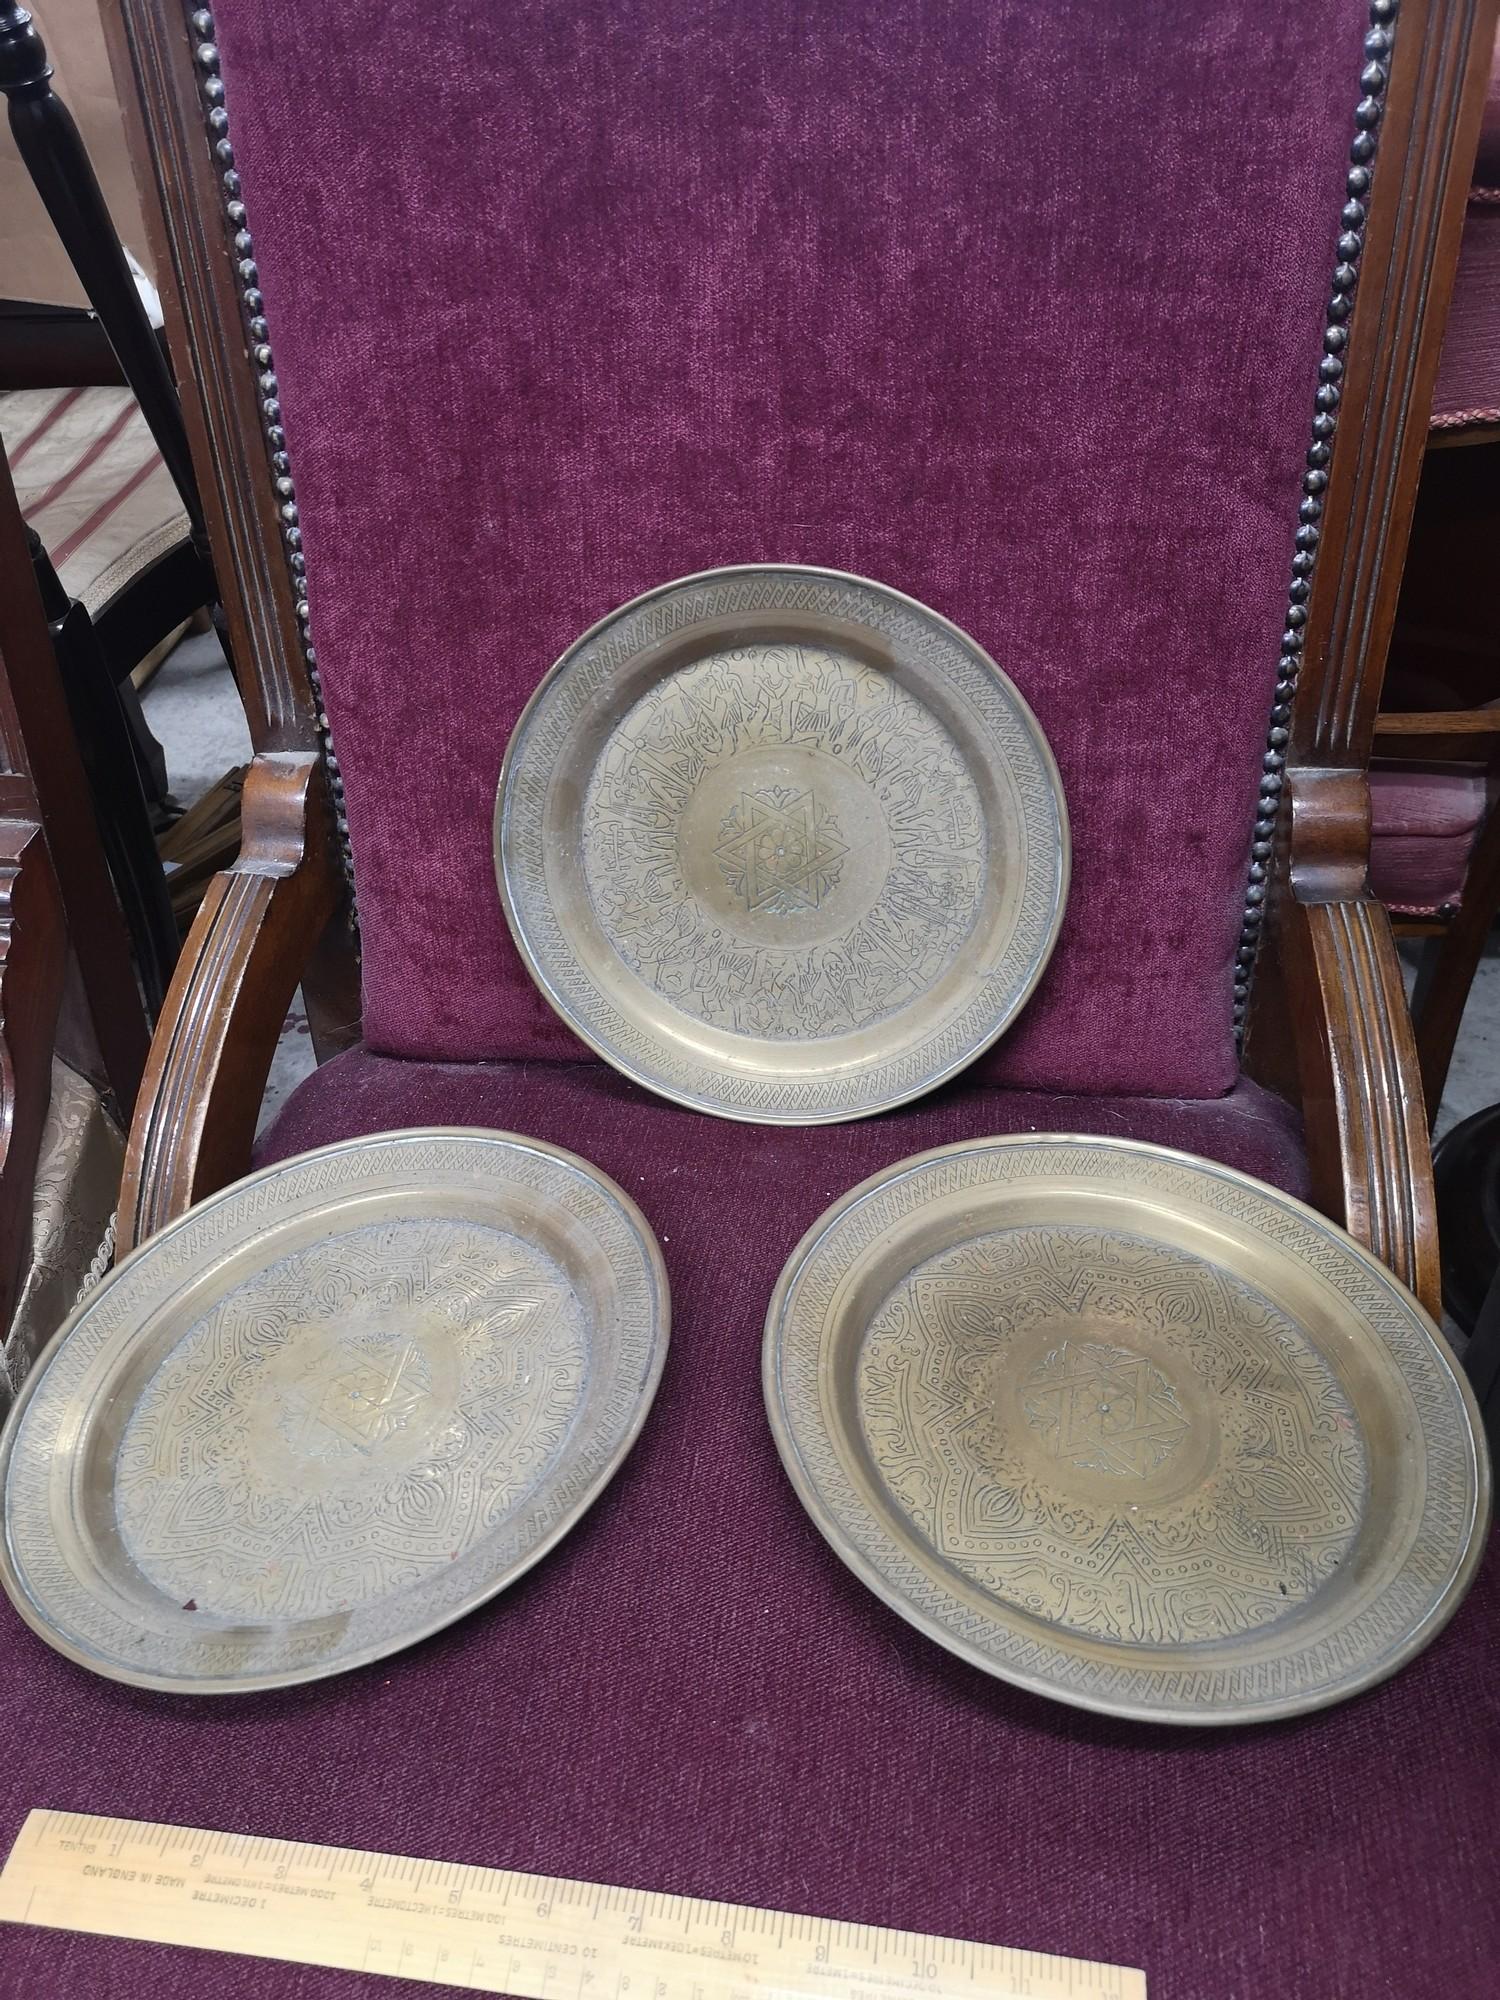 3 Arabic brass plates depicting Arabic writing etc.